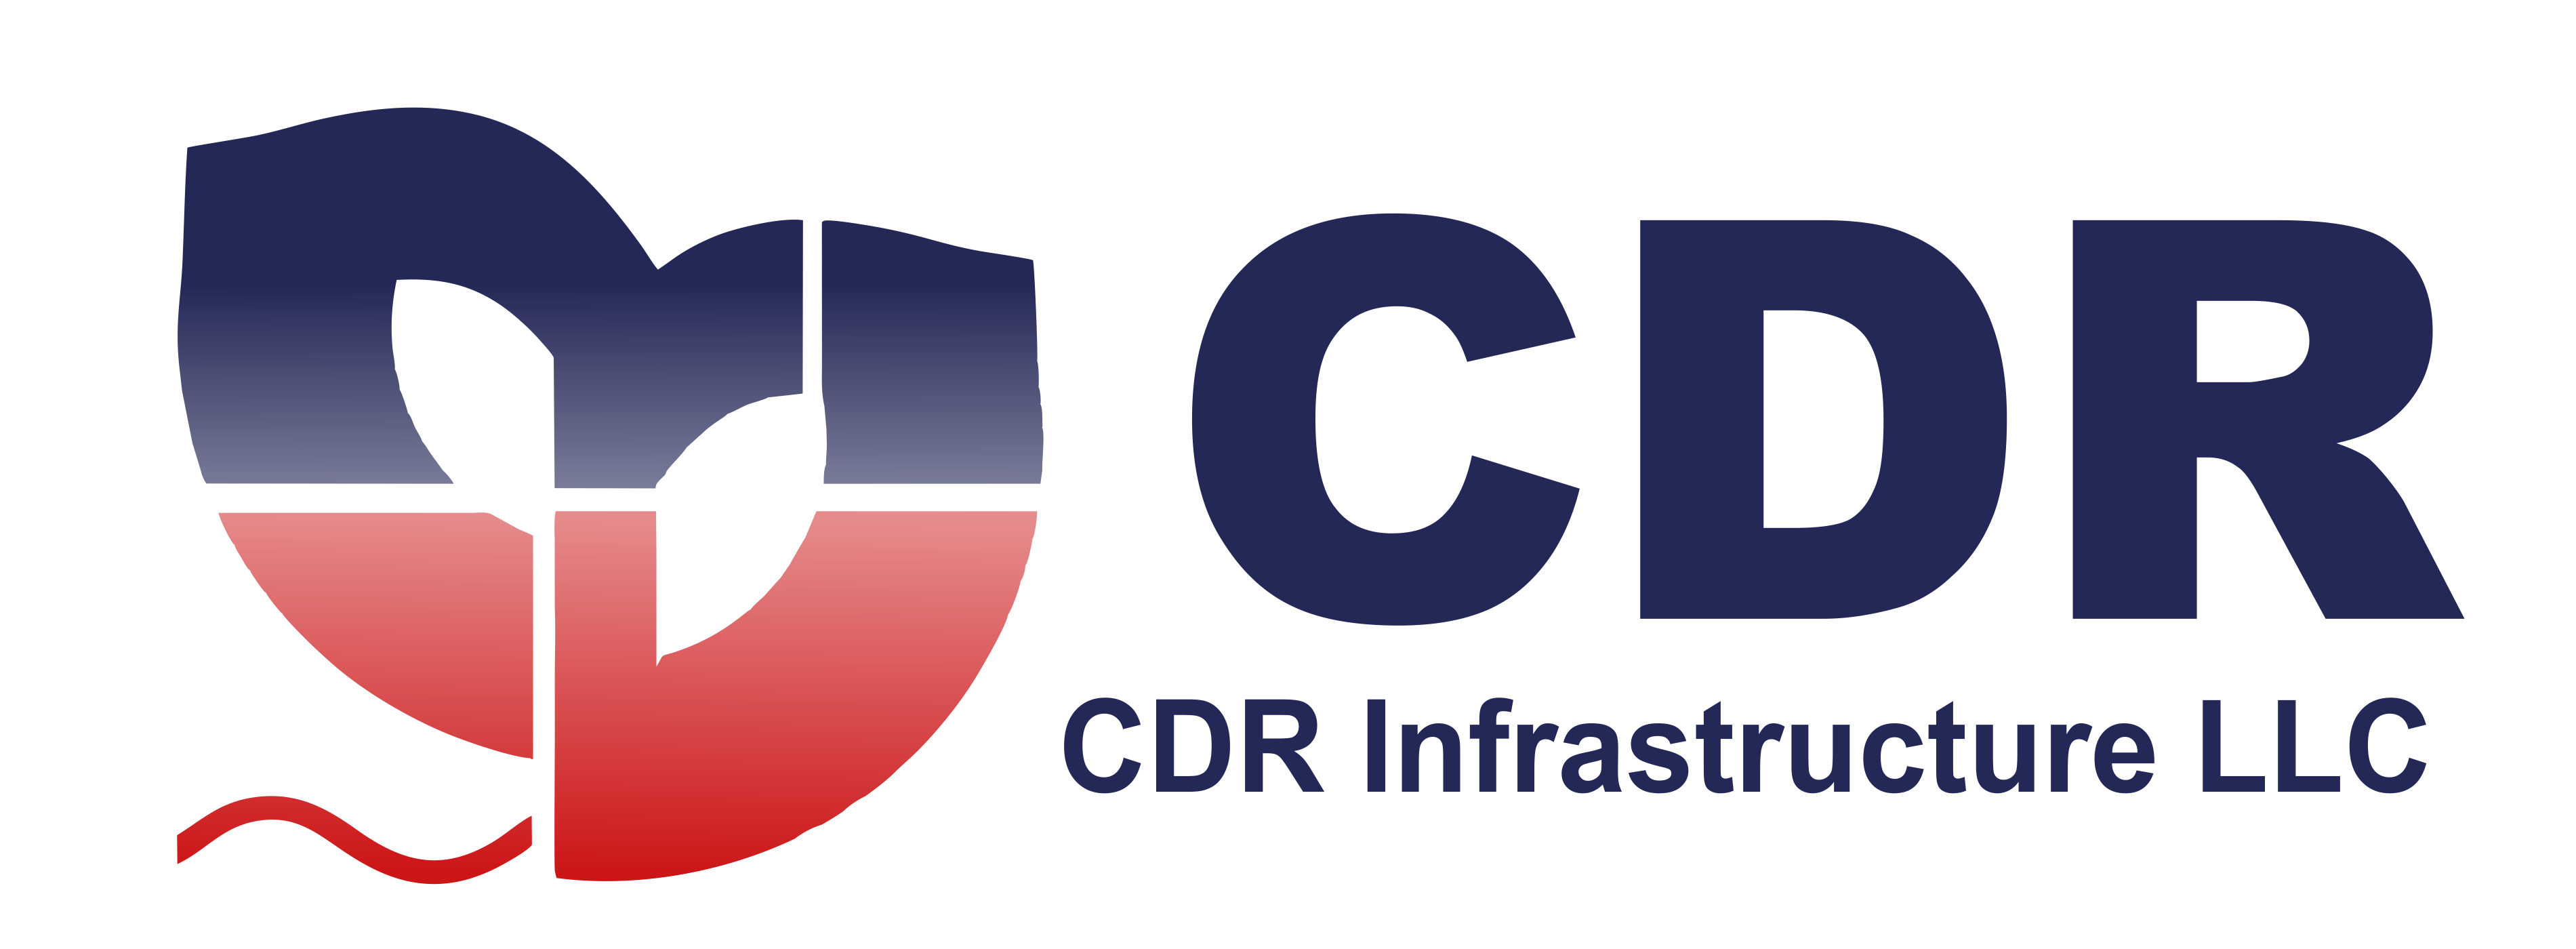 CDR Infrastructure LLC